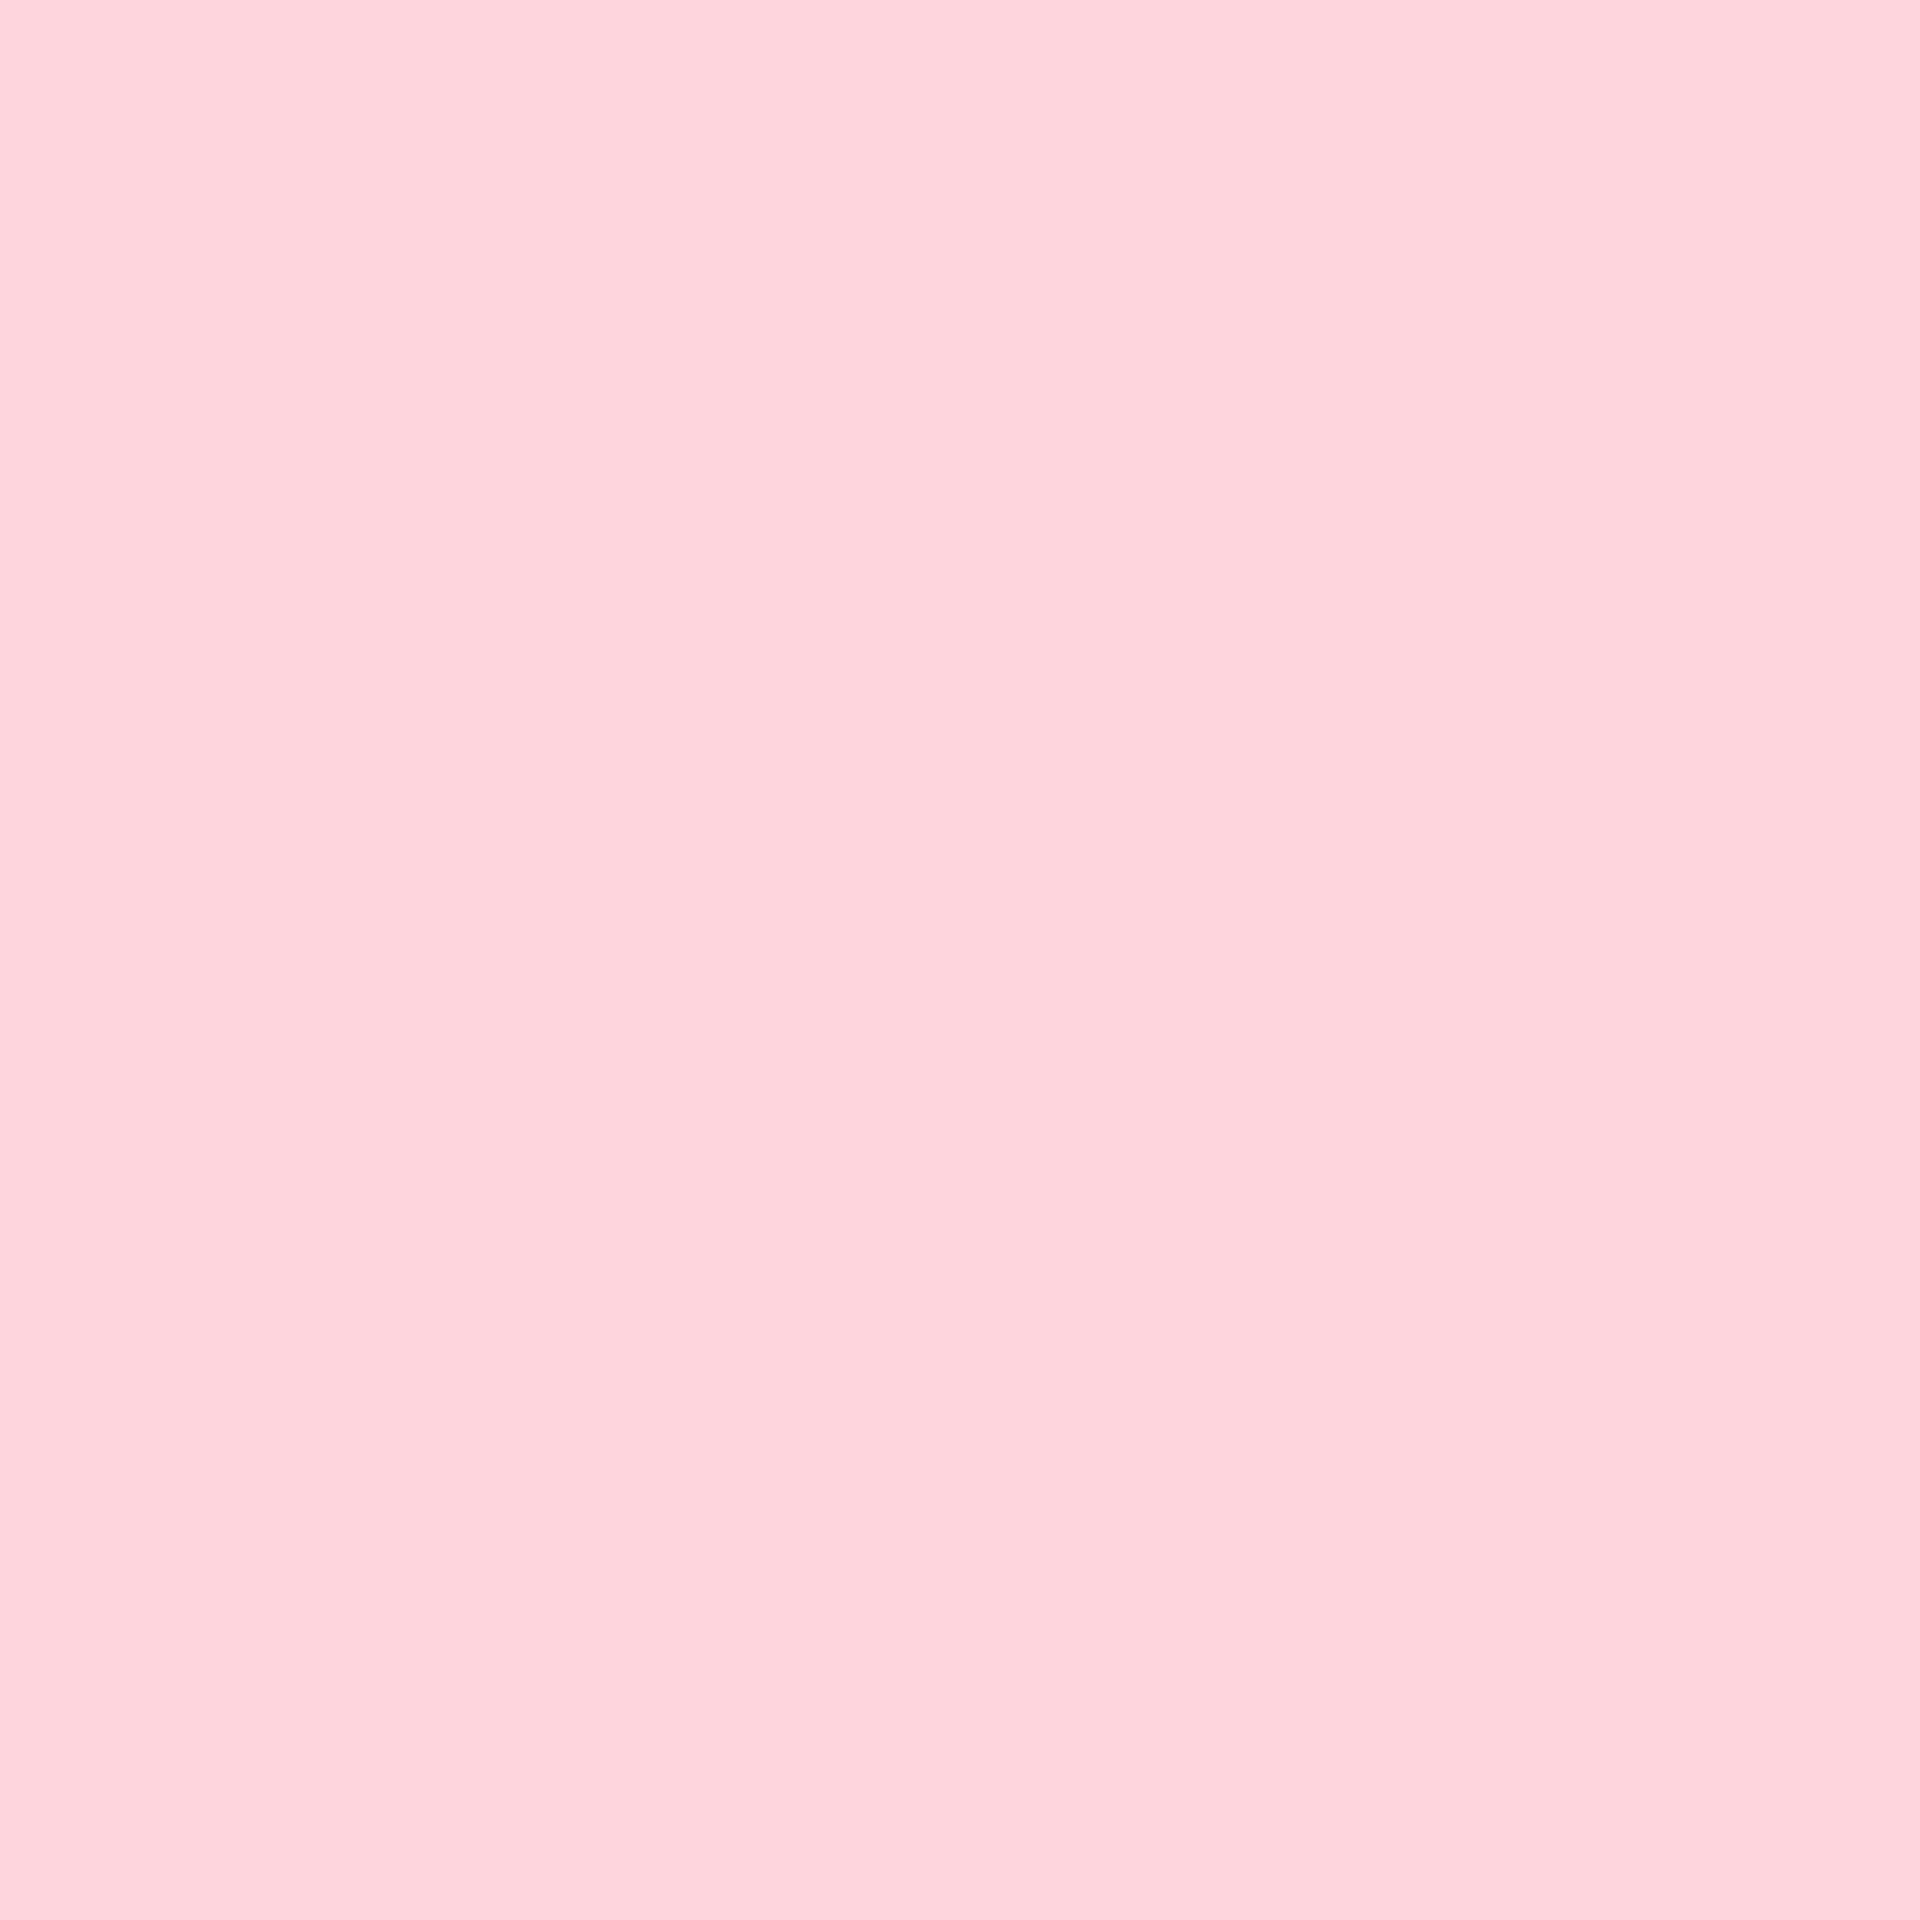 640x1136 Pink Solid Color Background  Pink plain wallpaper Pastel pink  wallpaper Pink wallpaper backgrounds